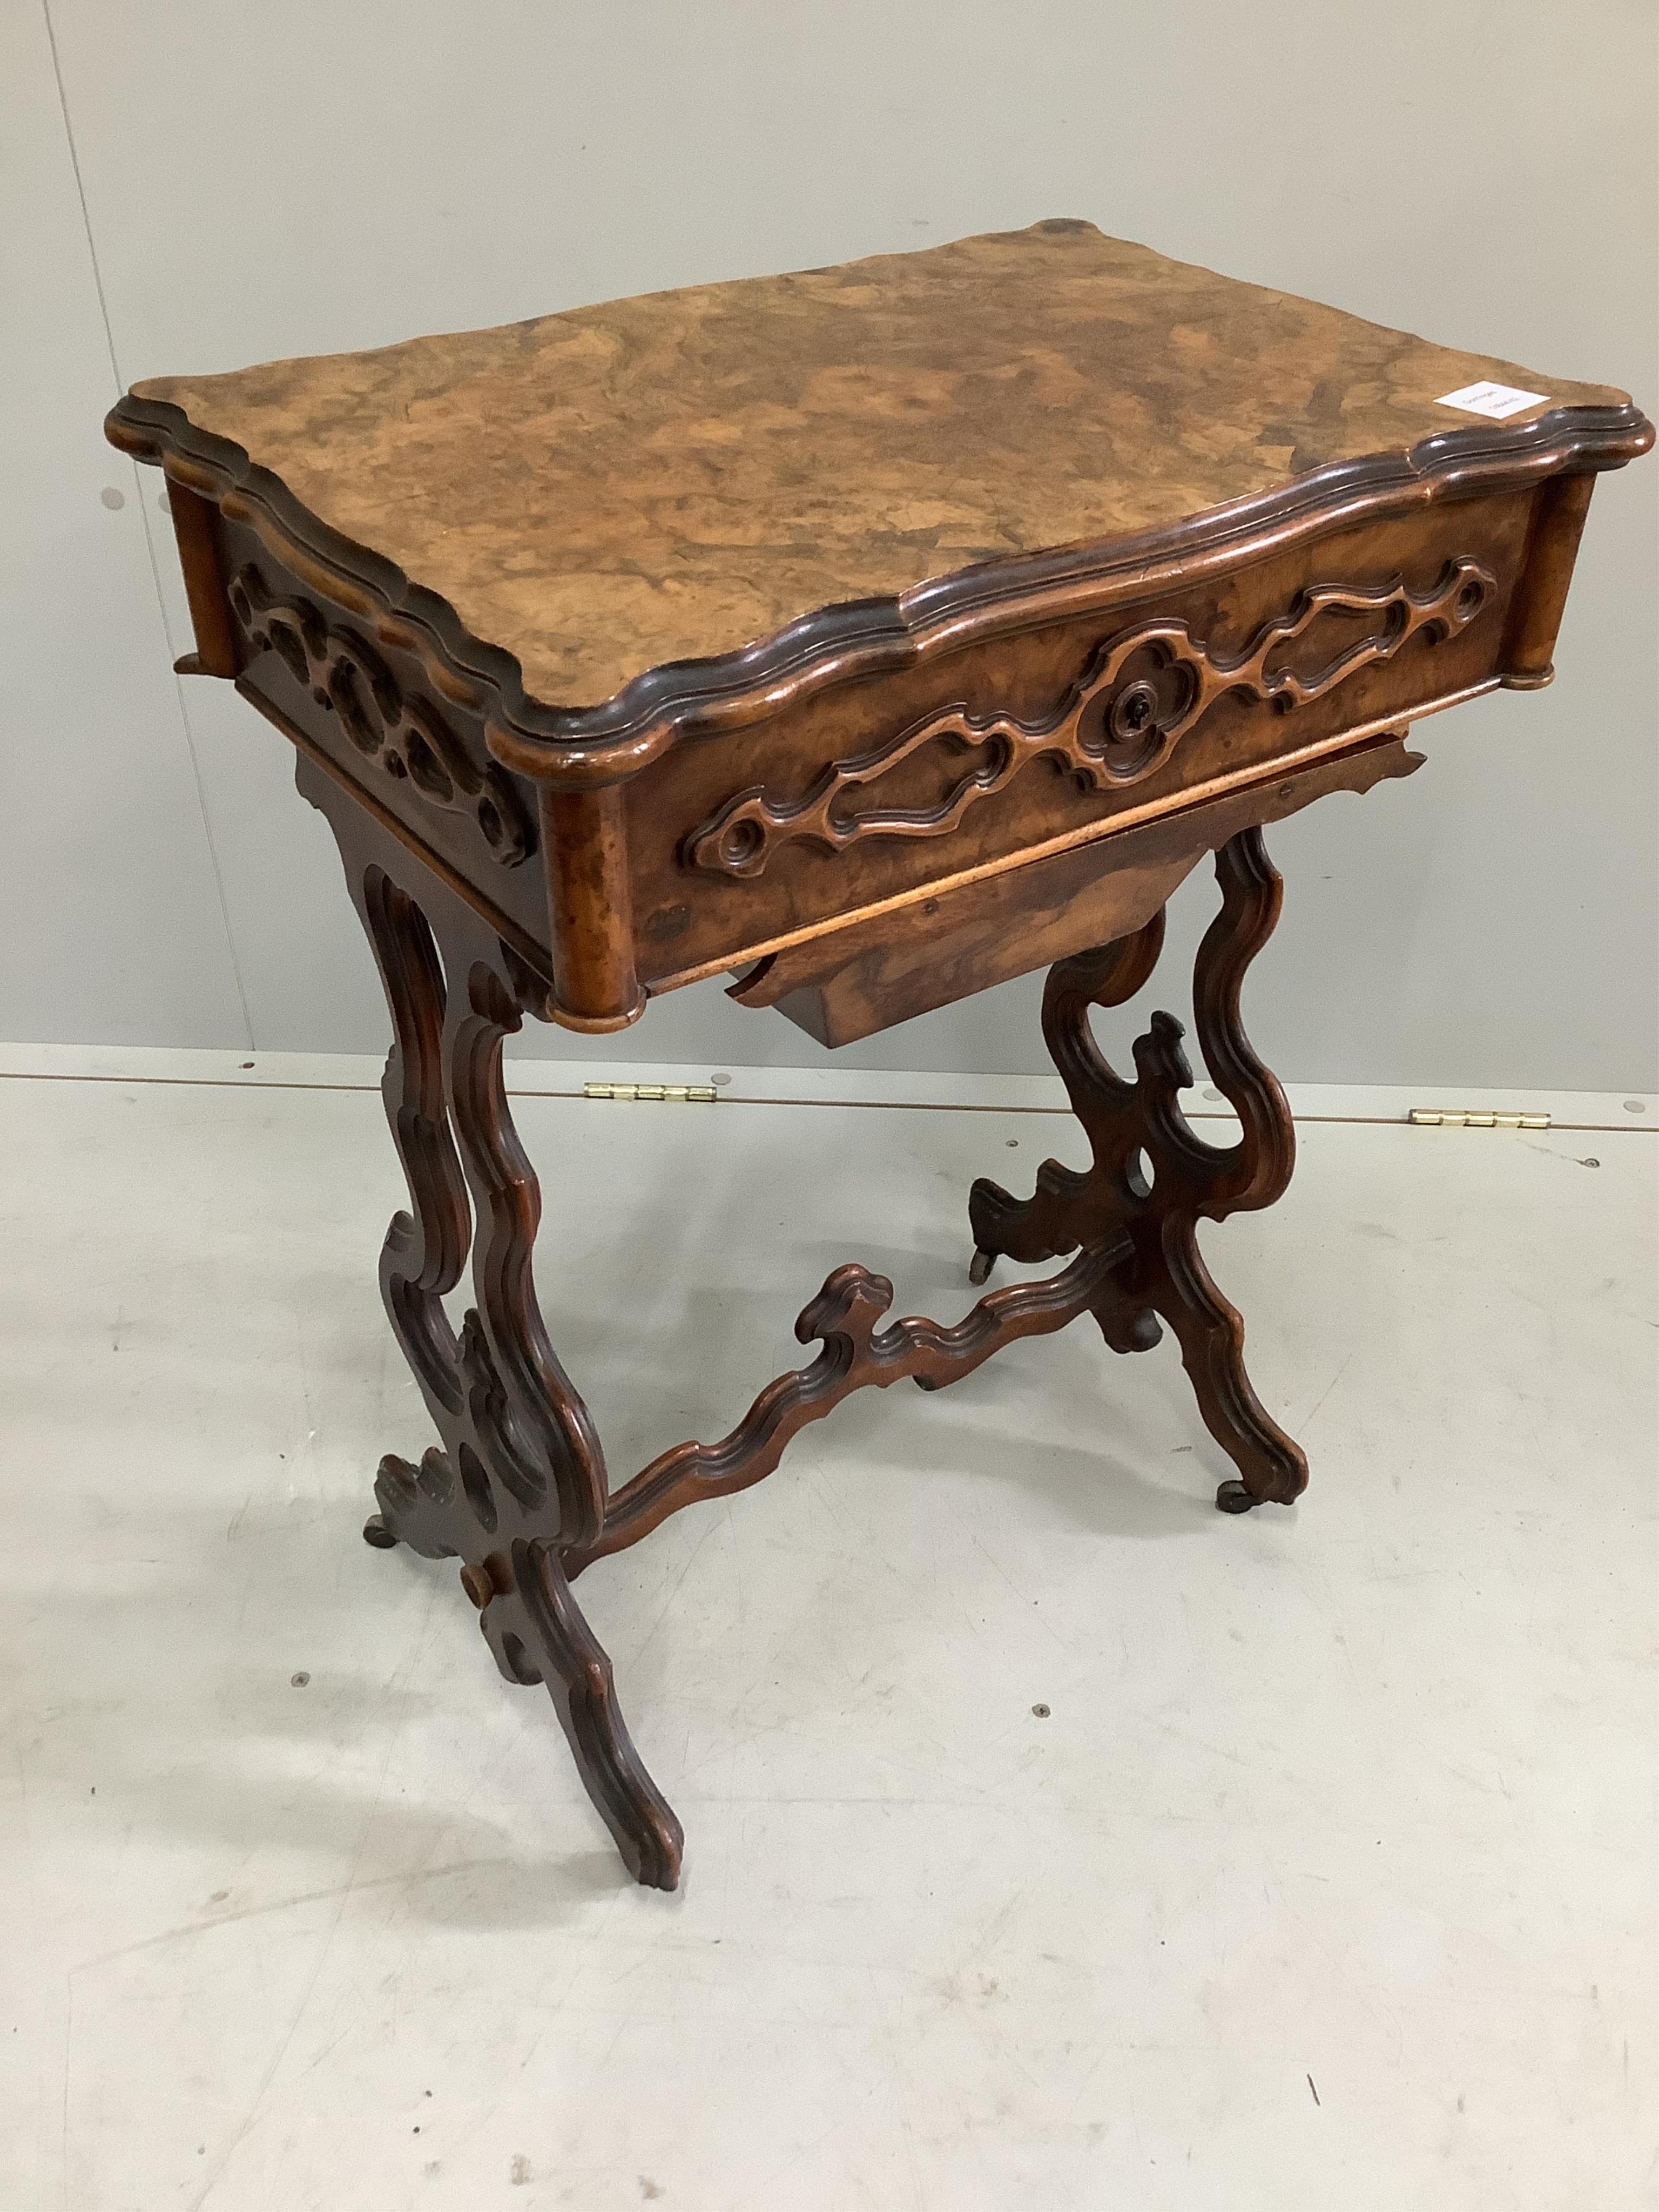 A 19th century French burr walnut work table, width 54cm, depth 39cm, height 72cm. Condition - fair